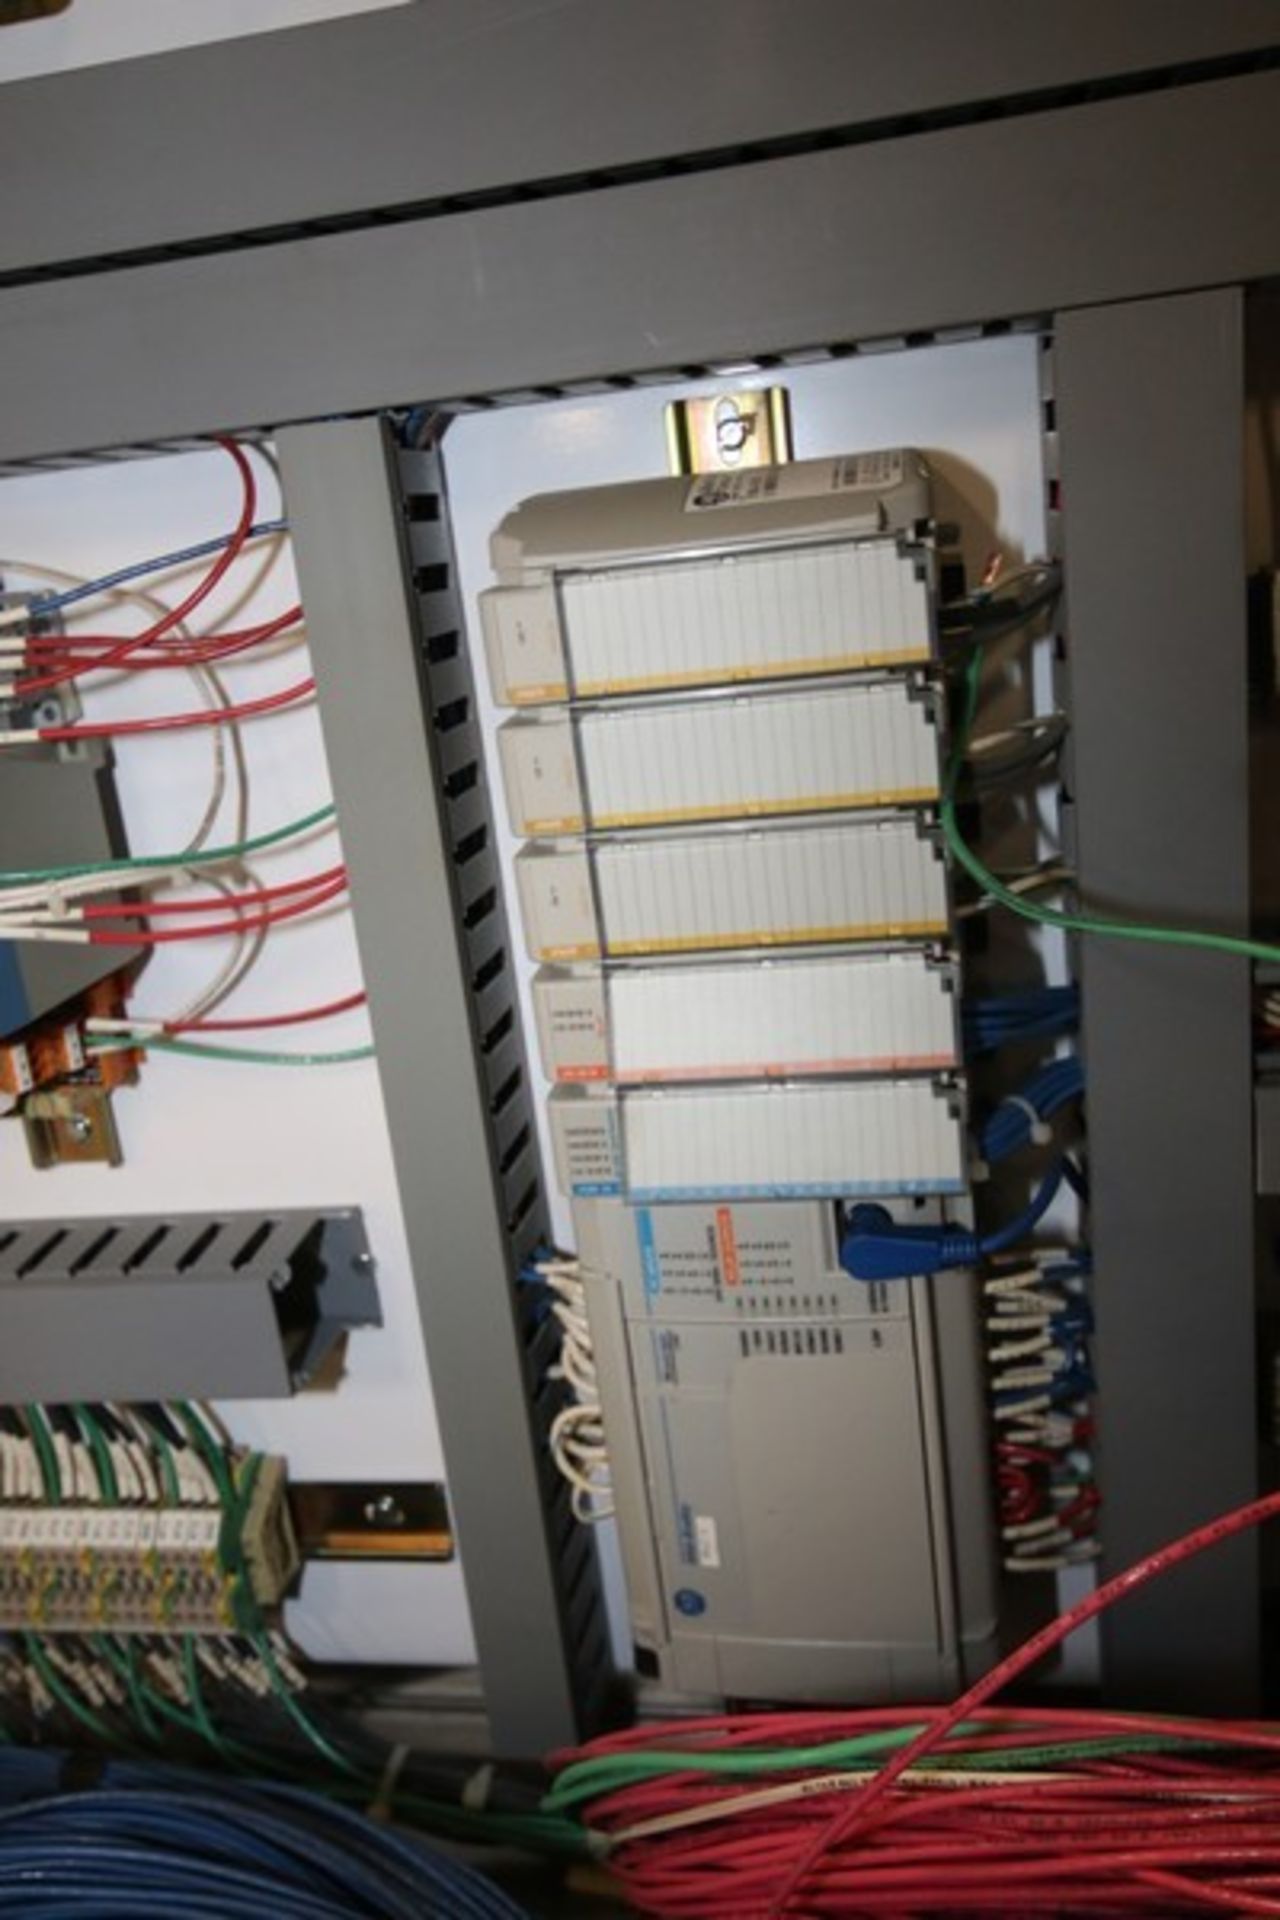 Metalcraft 5' L x 3' W x 12"D S/S Control Panelwith Allen Bradley Micrologix 1500 PLC Controller - Image 3 of 7